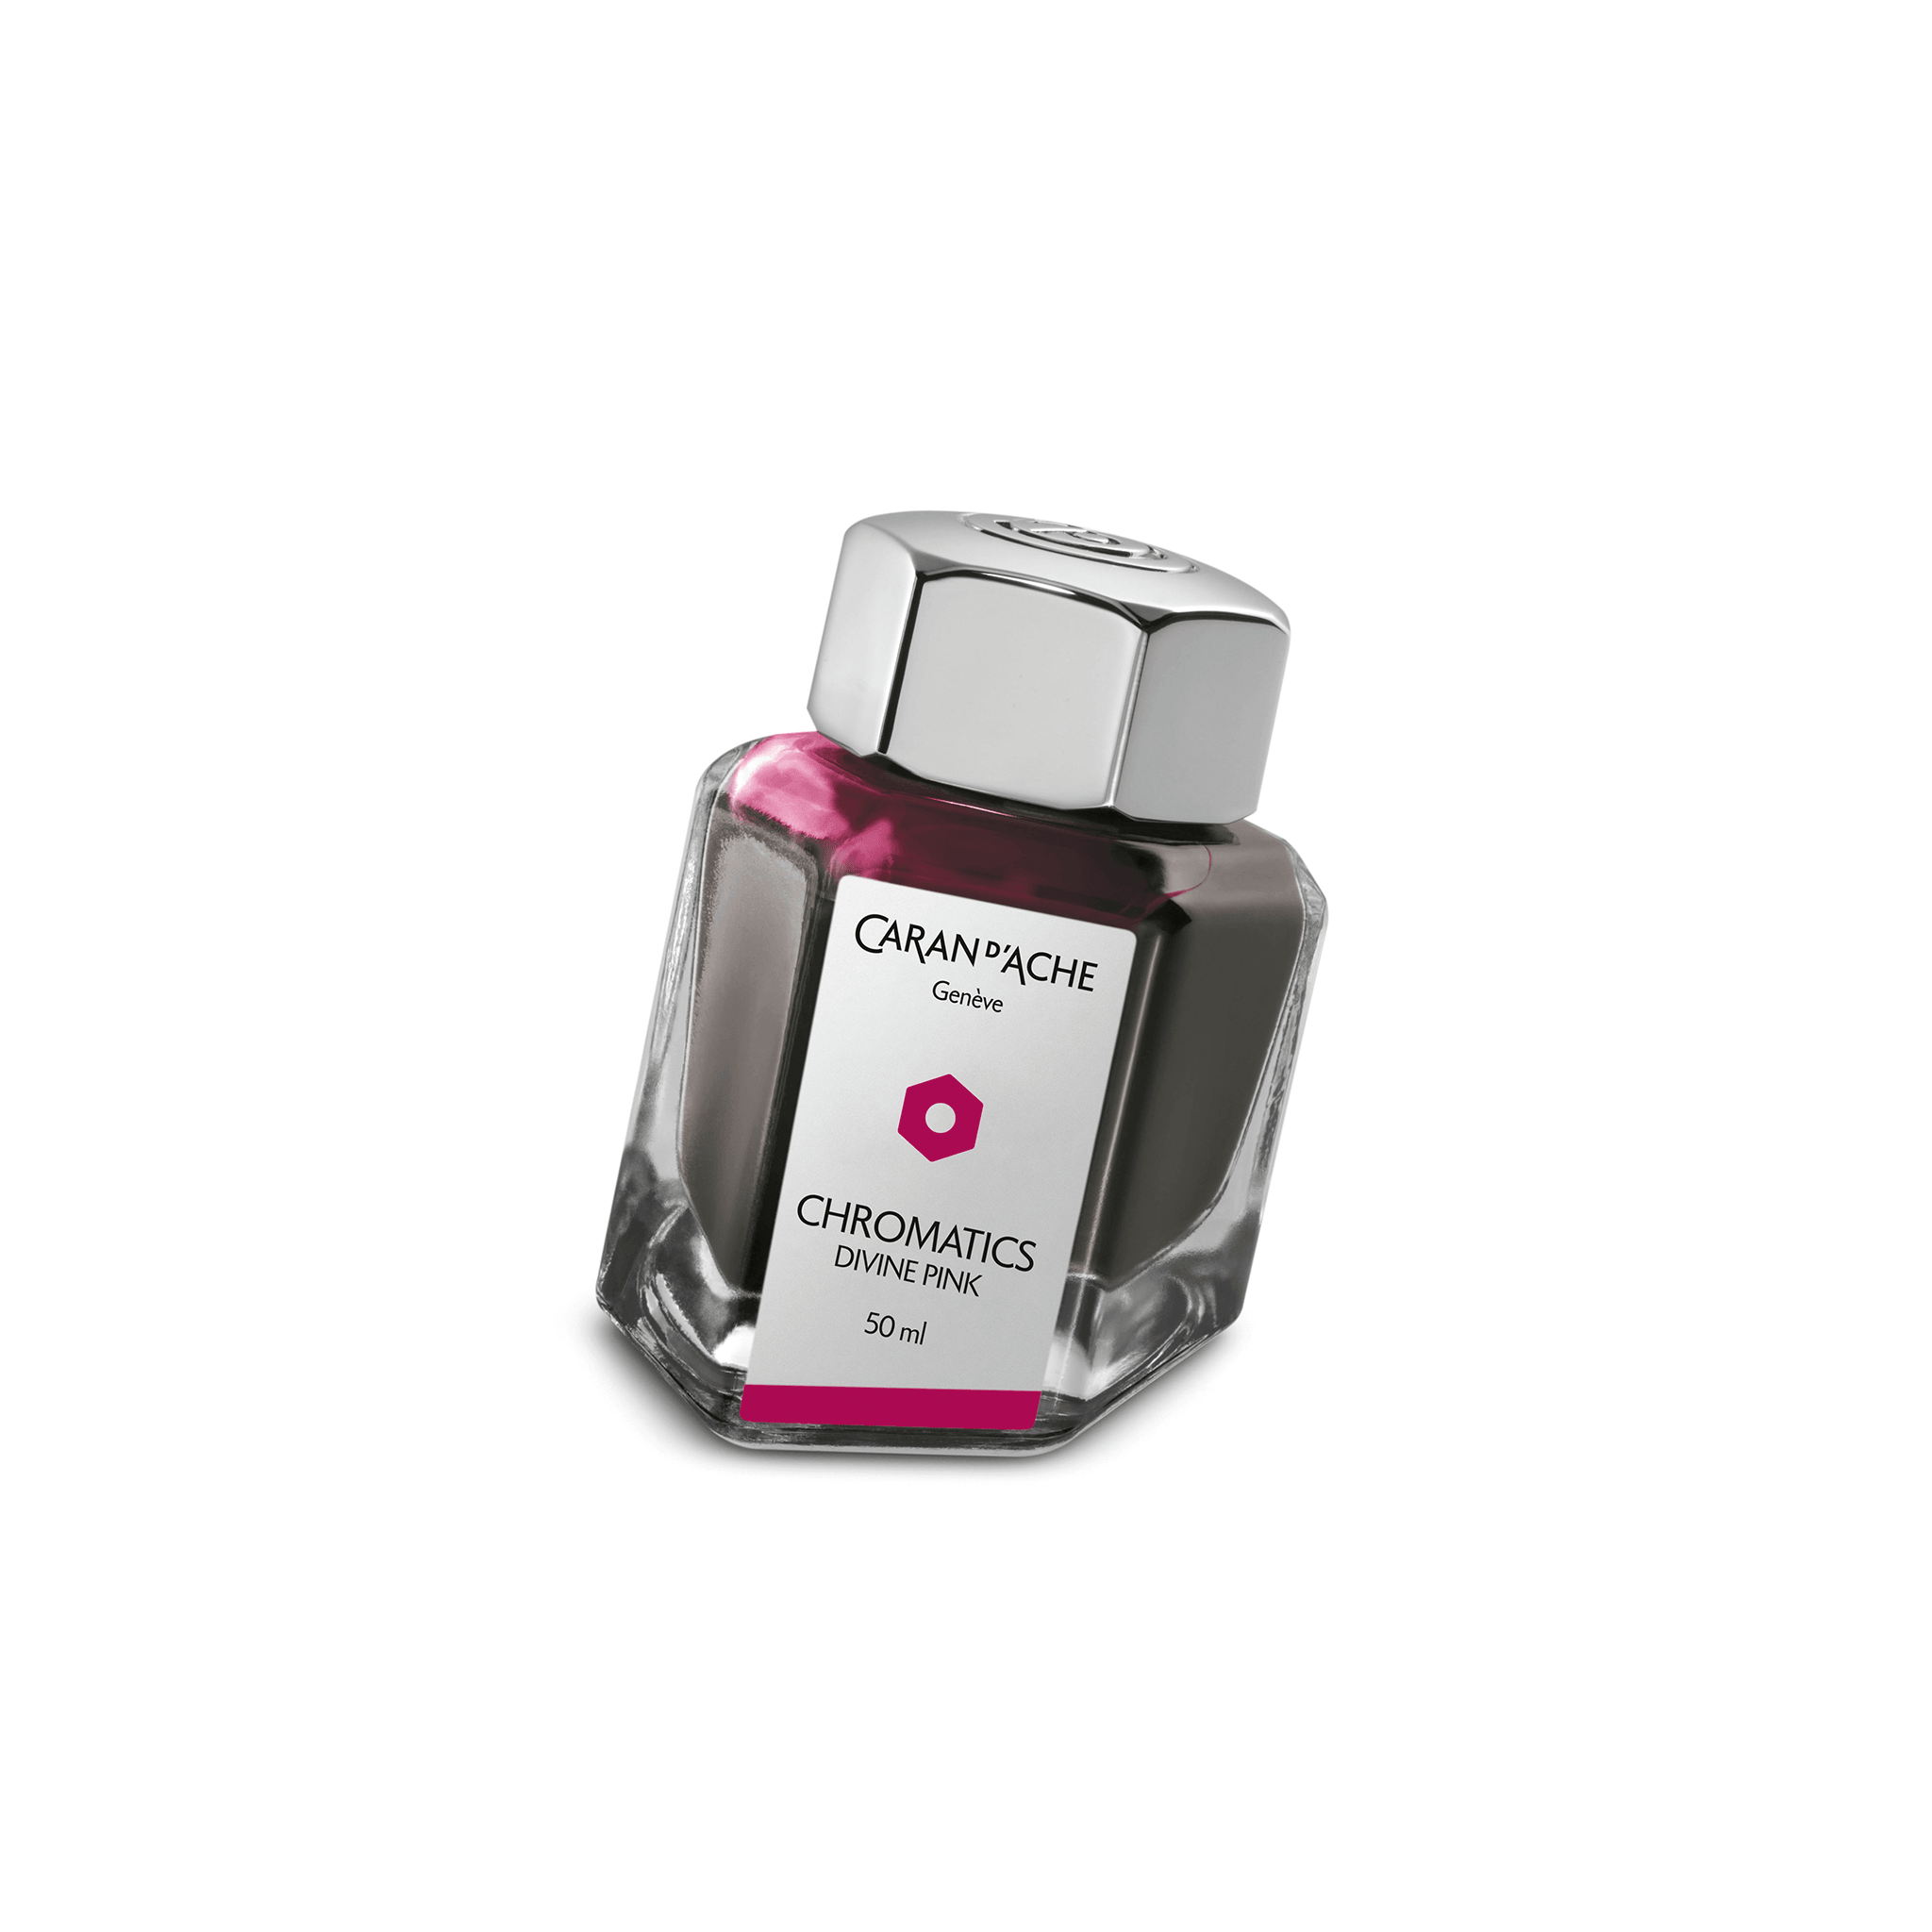 Caran D'Ache Chromatics Ink Bottle Divine Pink 50ml - Laywine's